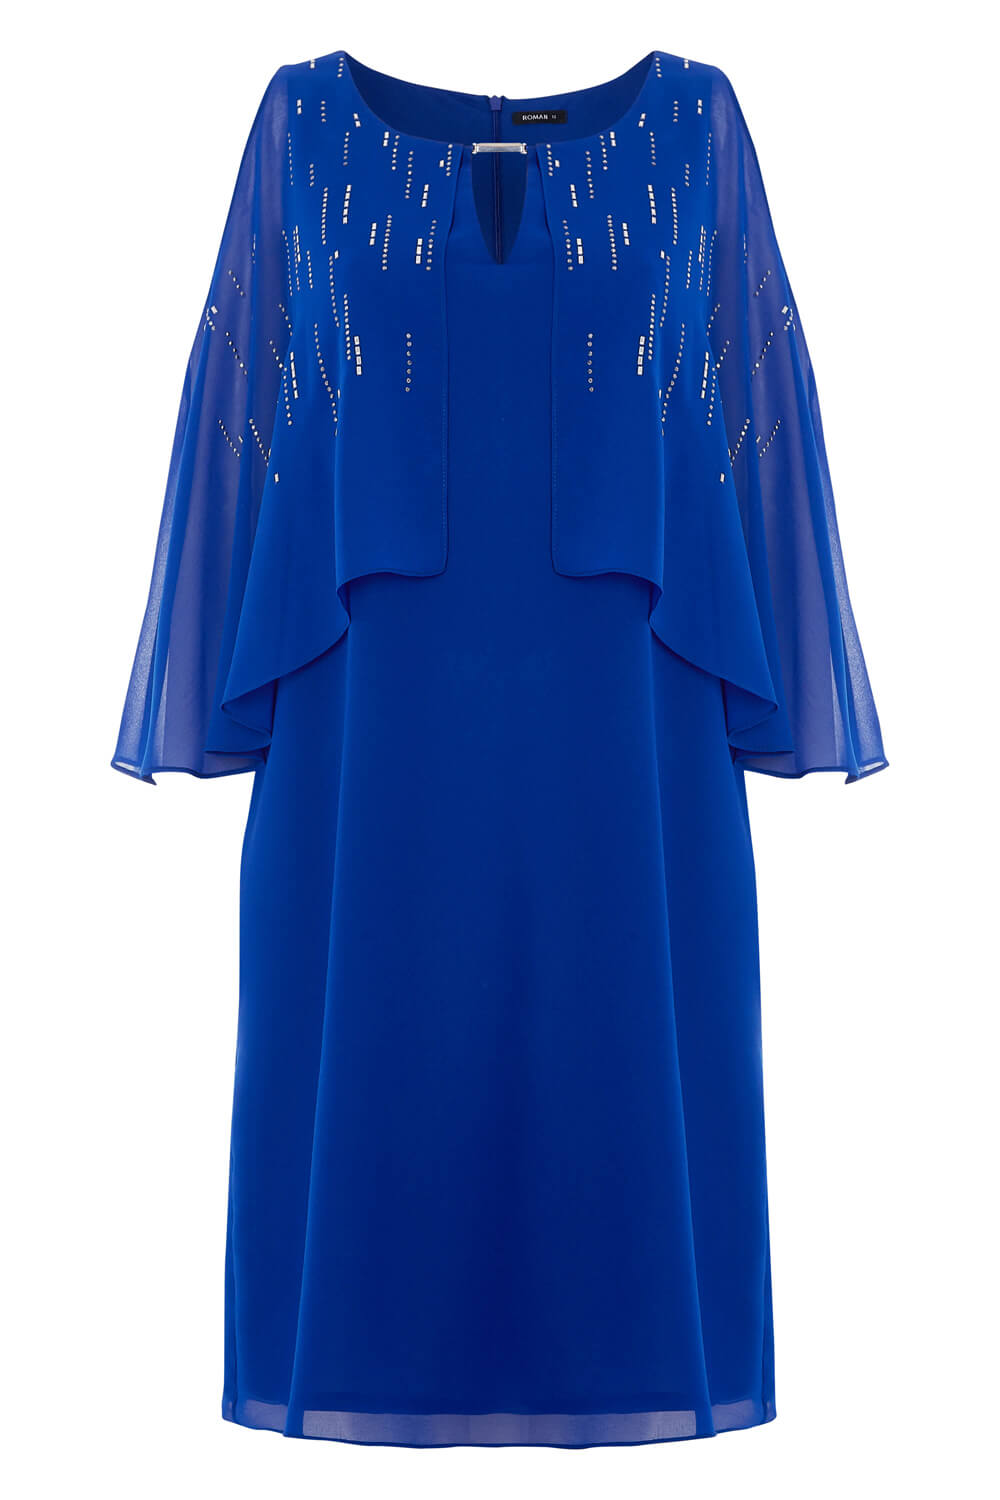 Sparkle Chiffon Overlay Dress in Royal Blue - Roman Originals UK